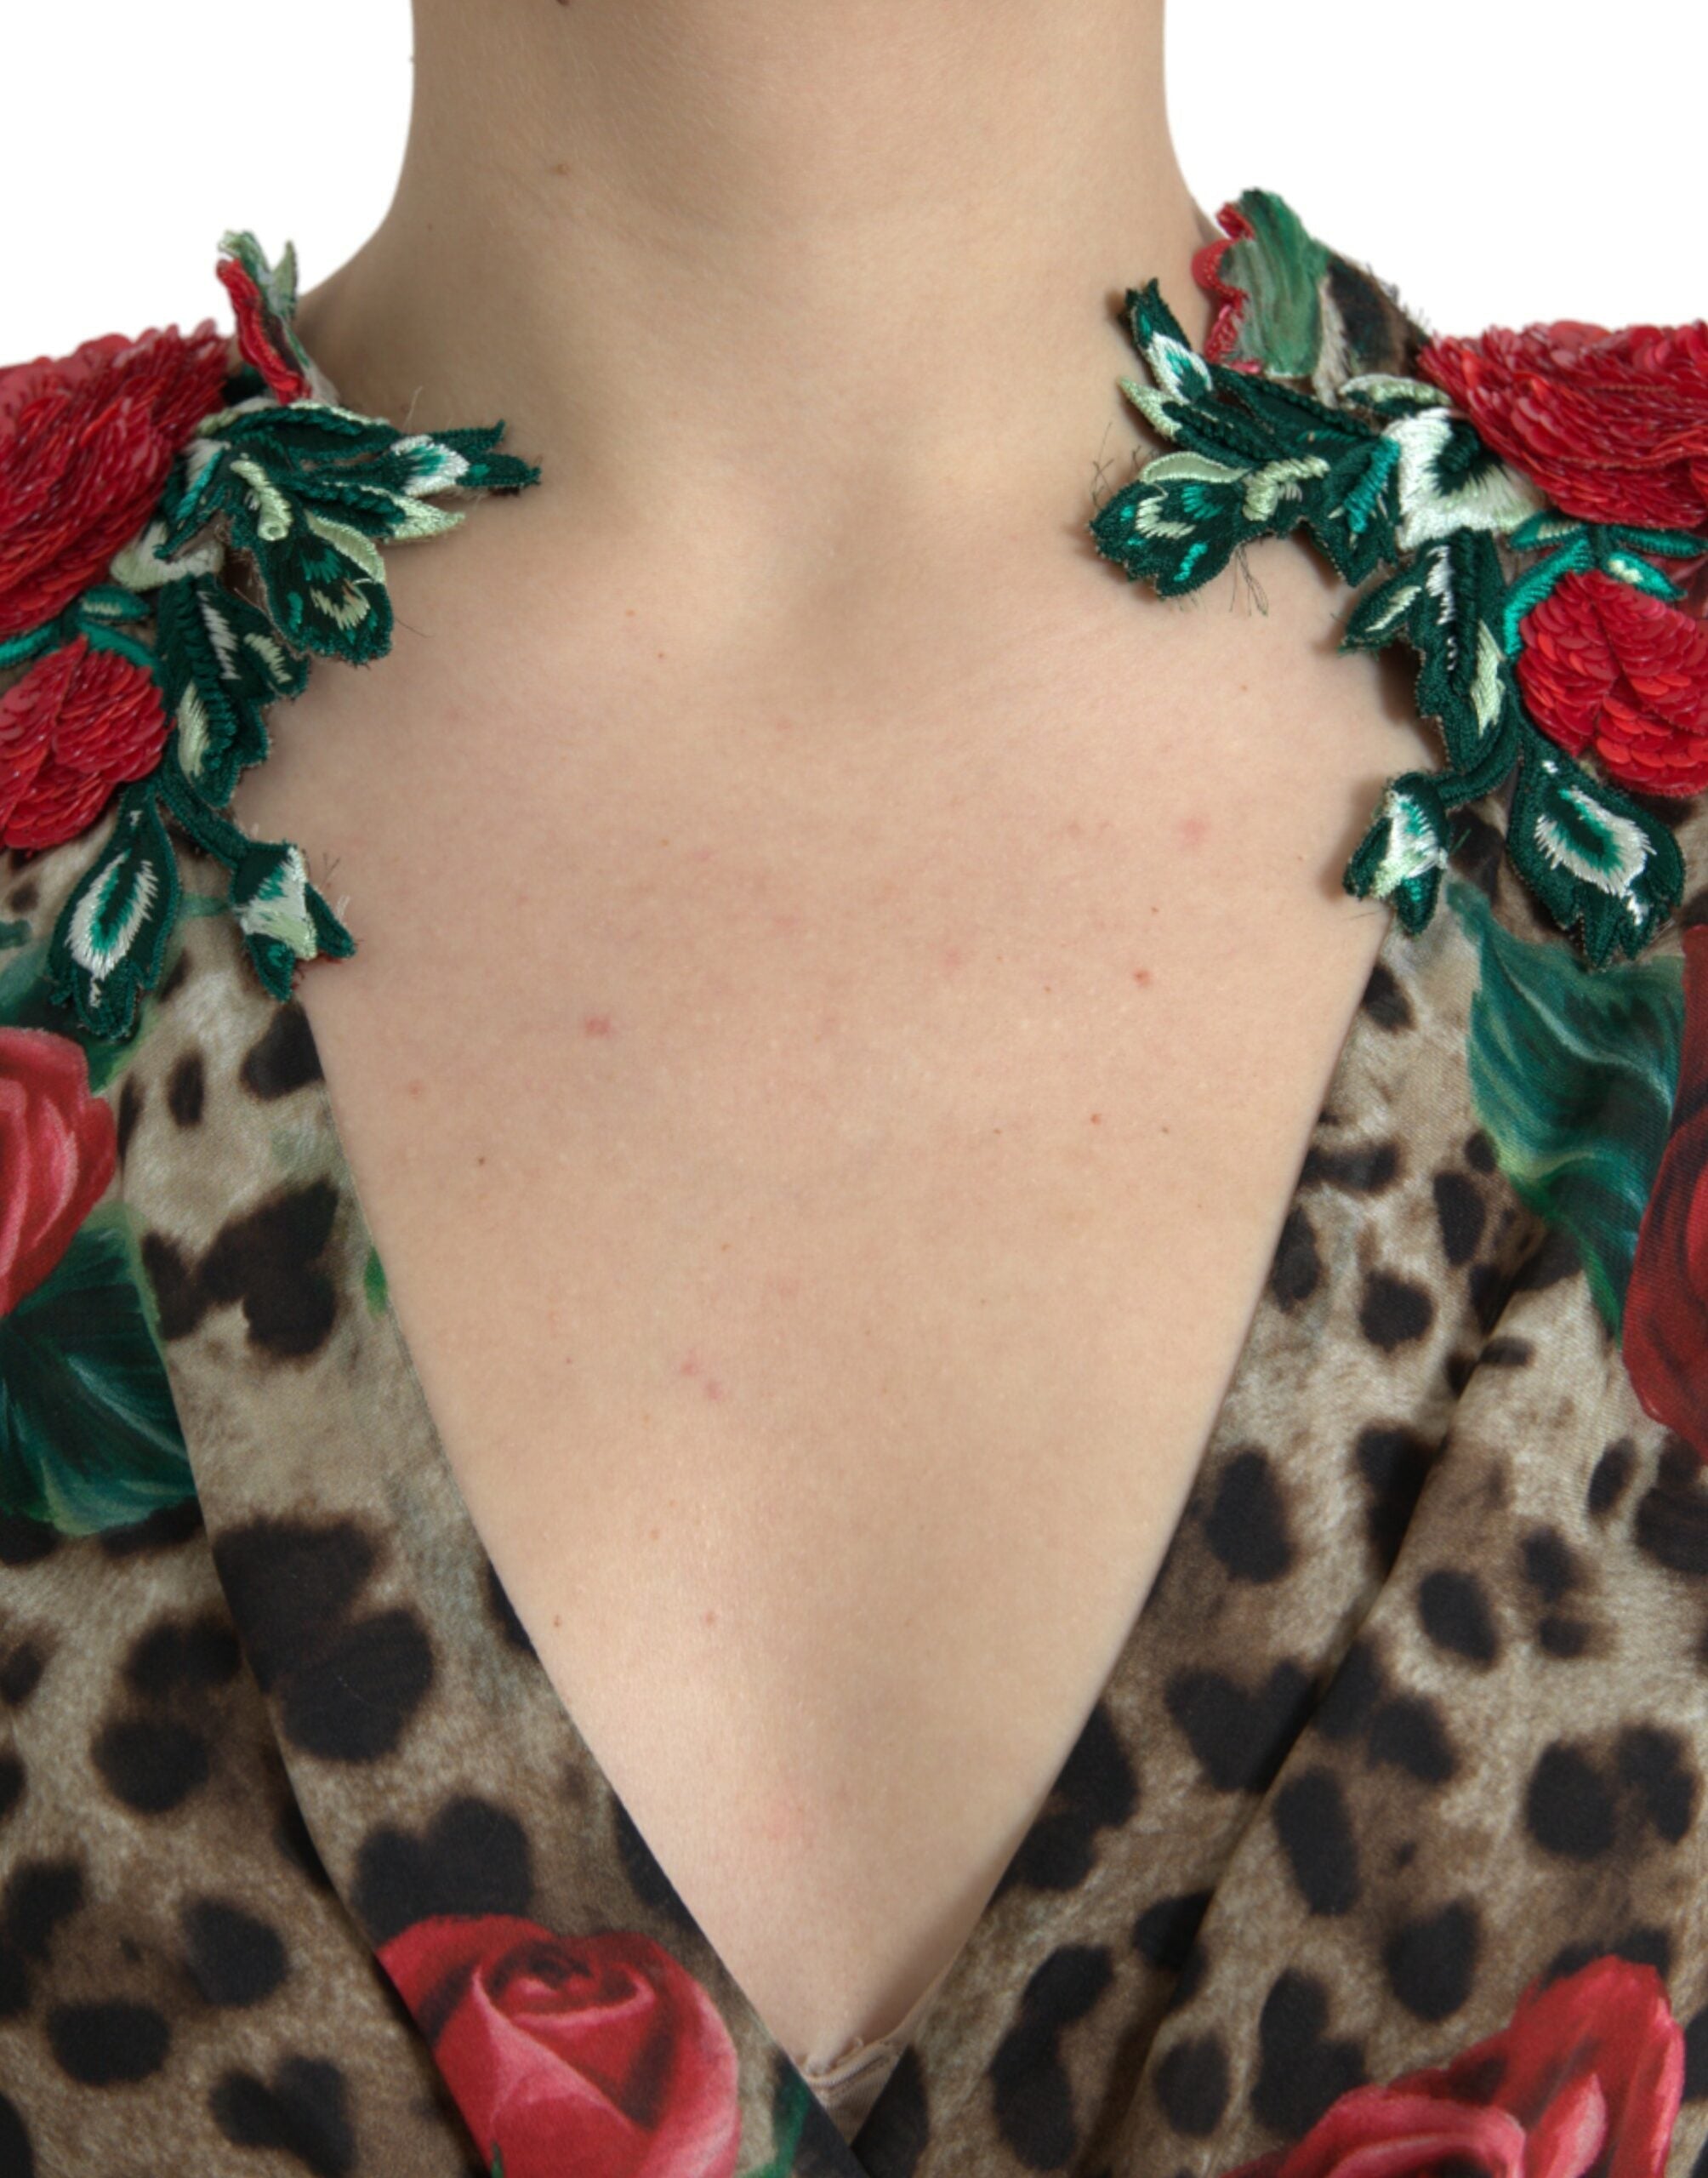 Dolce & Gabbana Multifarver Silke Maxi Evening Dress-Modeoutlet